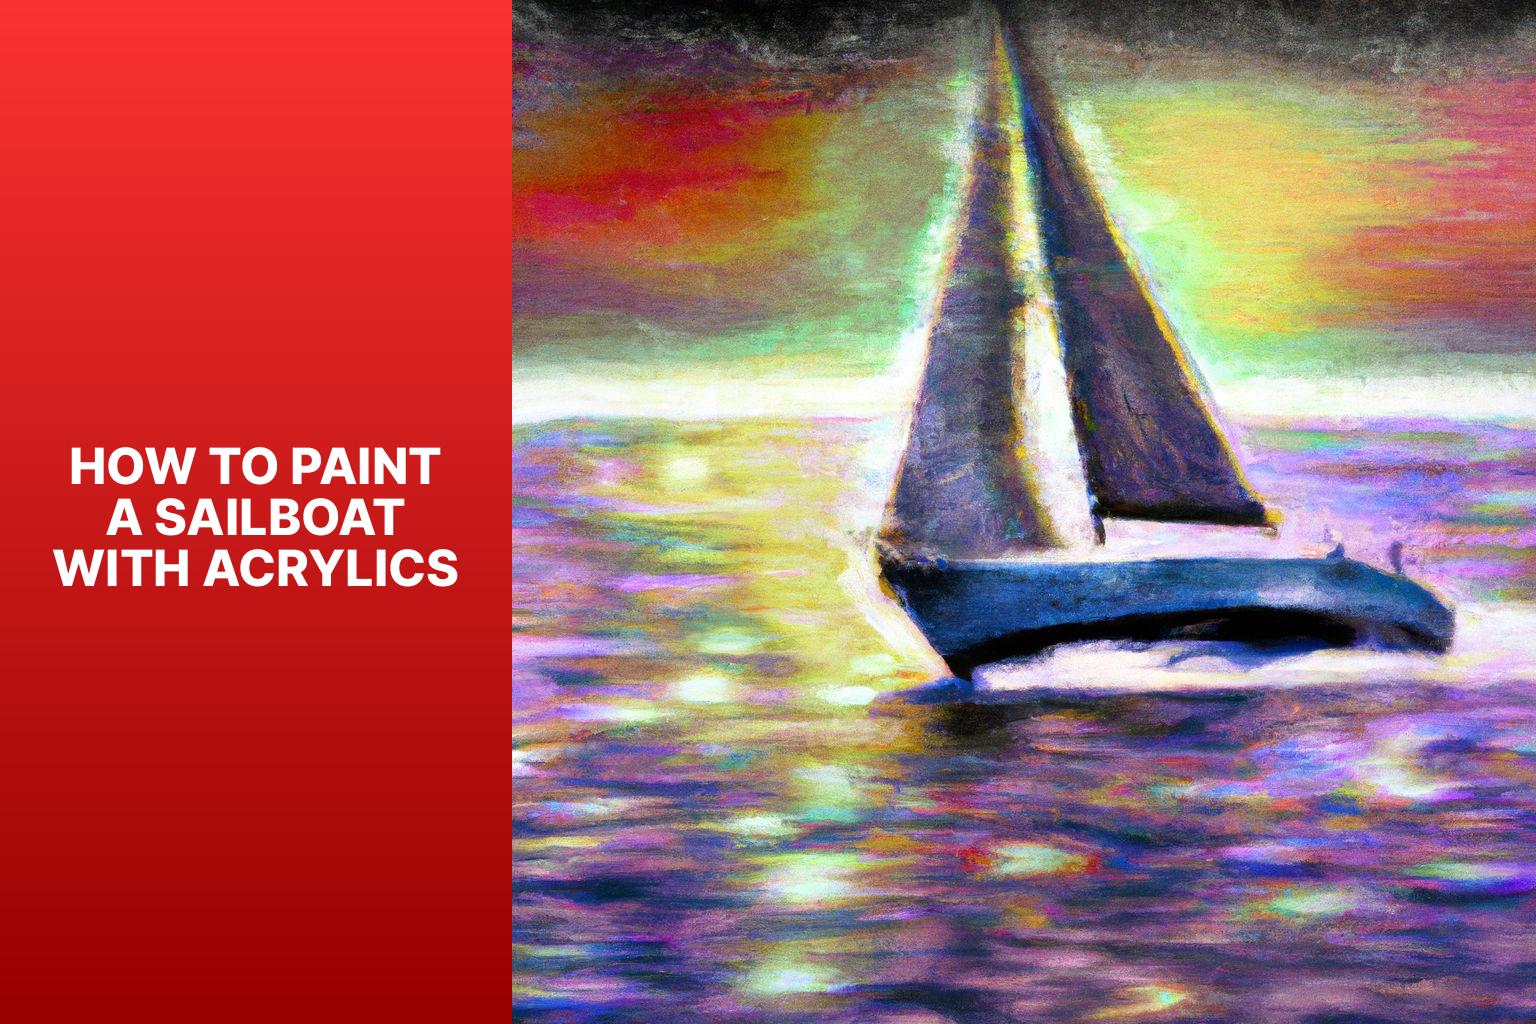 sailboat schooner painting